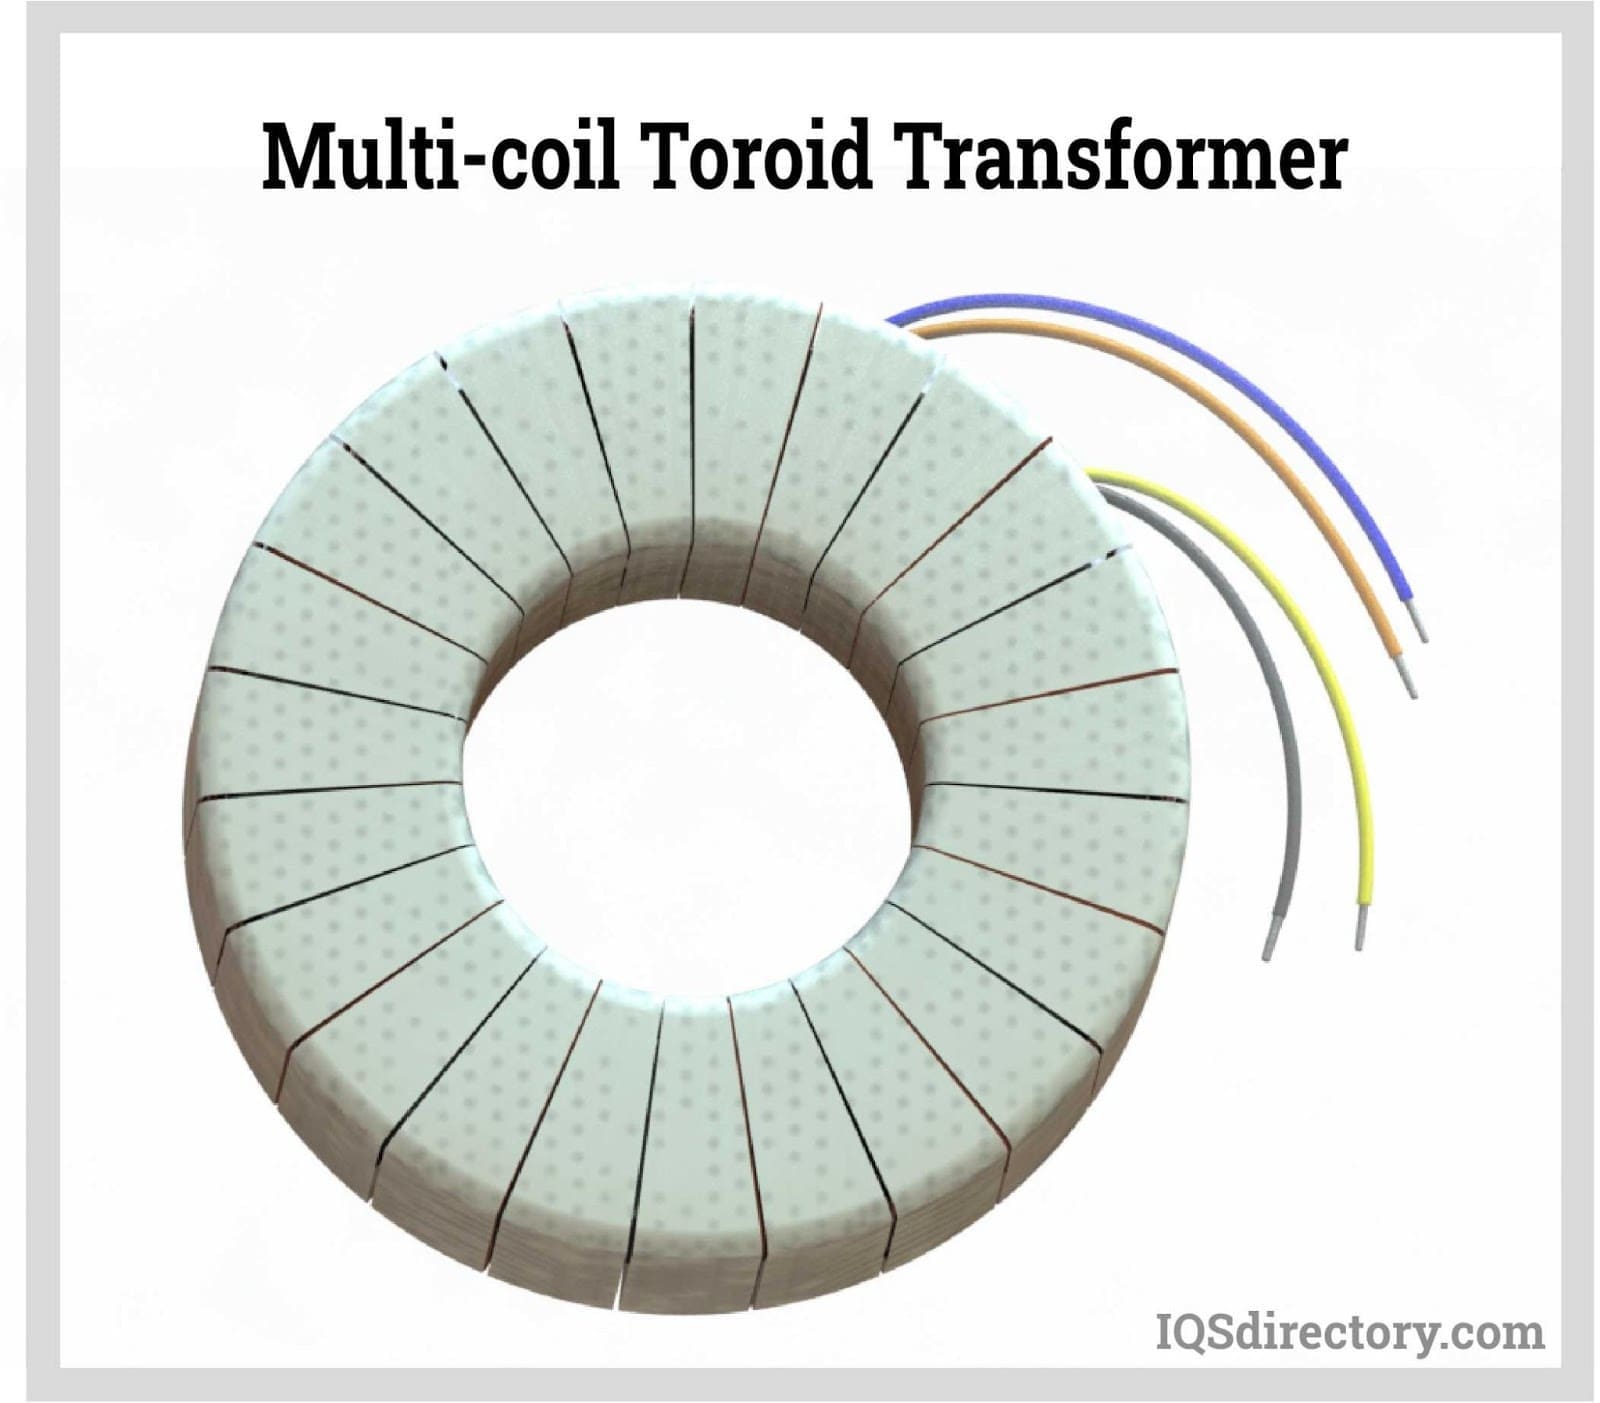 Toroidal Core Transformer